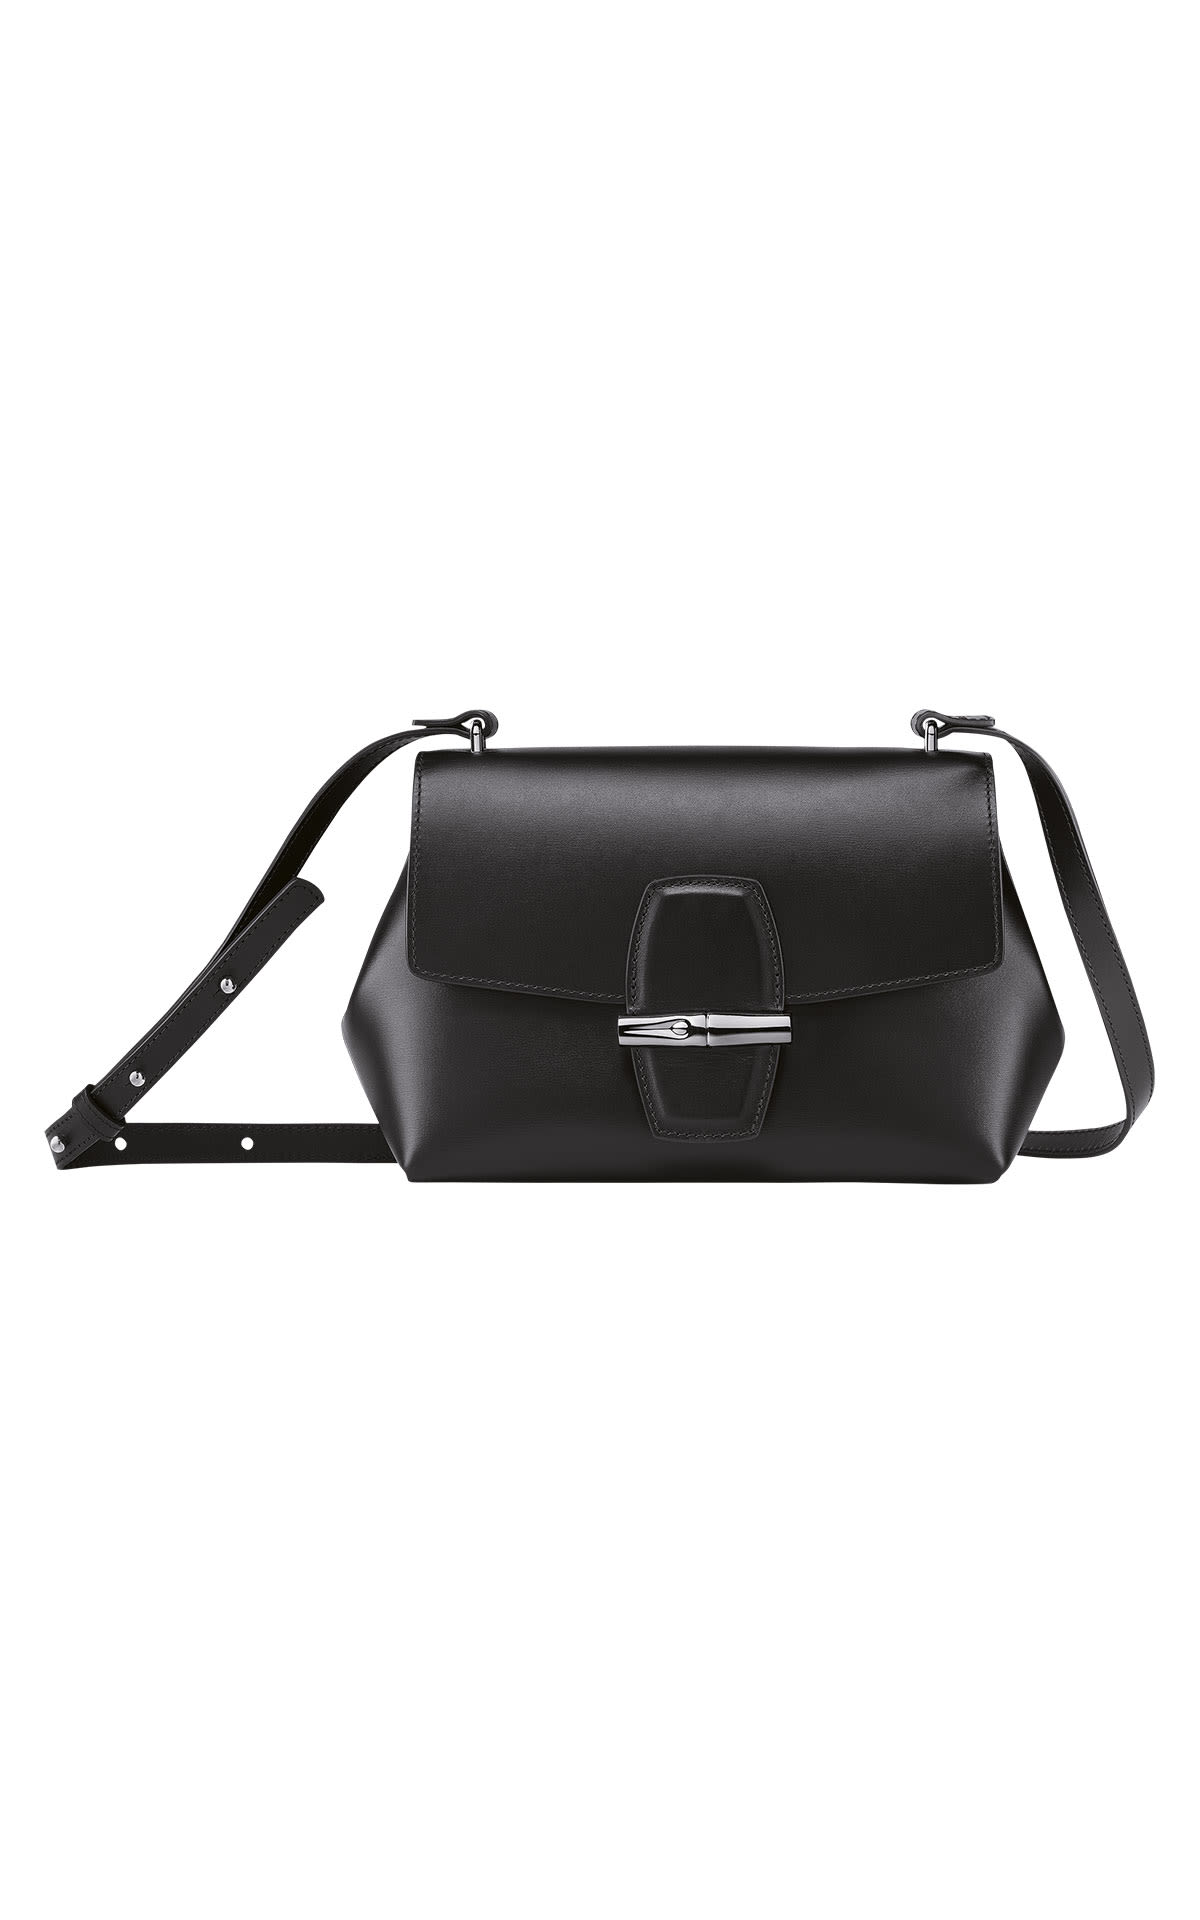 Longchamp Roseau box crossbody bag with adjustable shoulder strap from Bicester Village